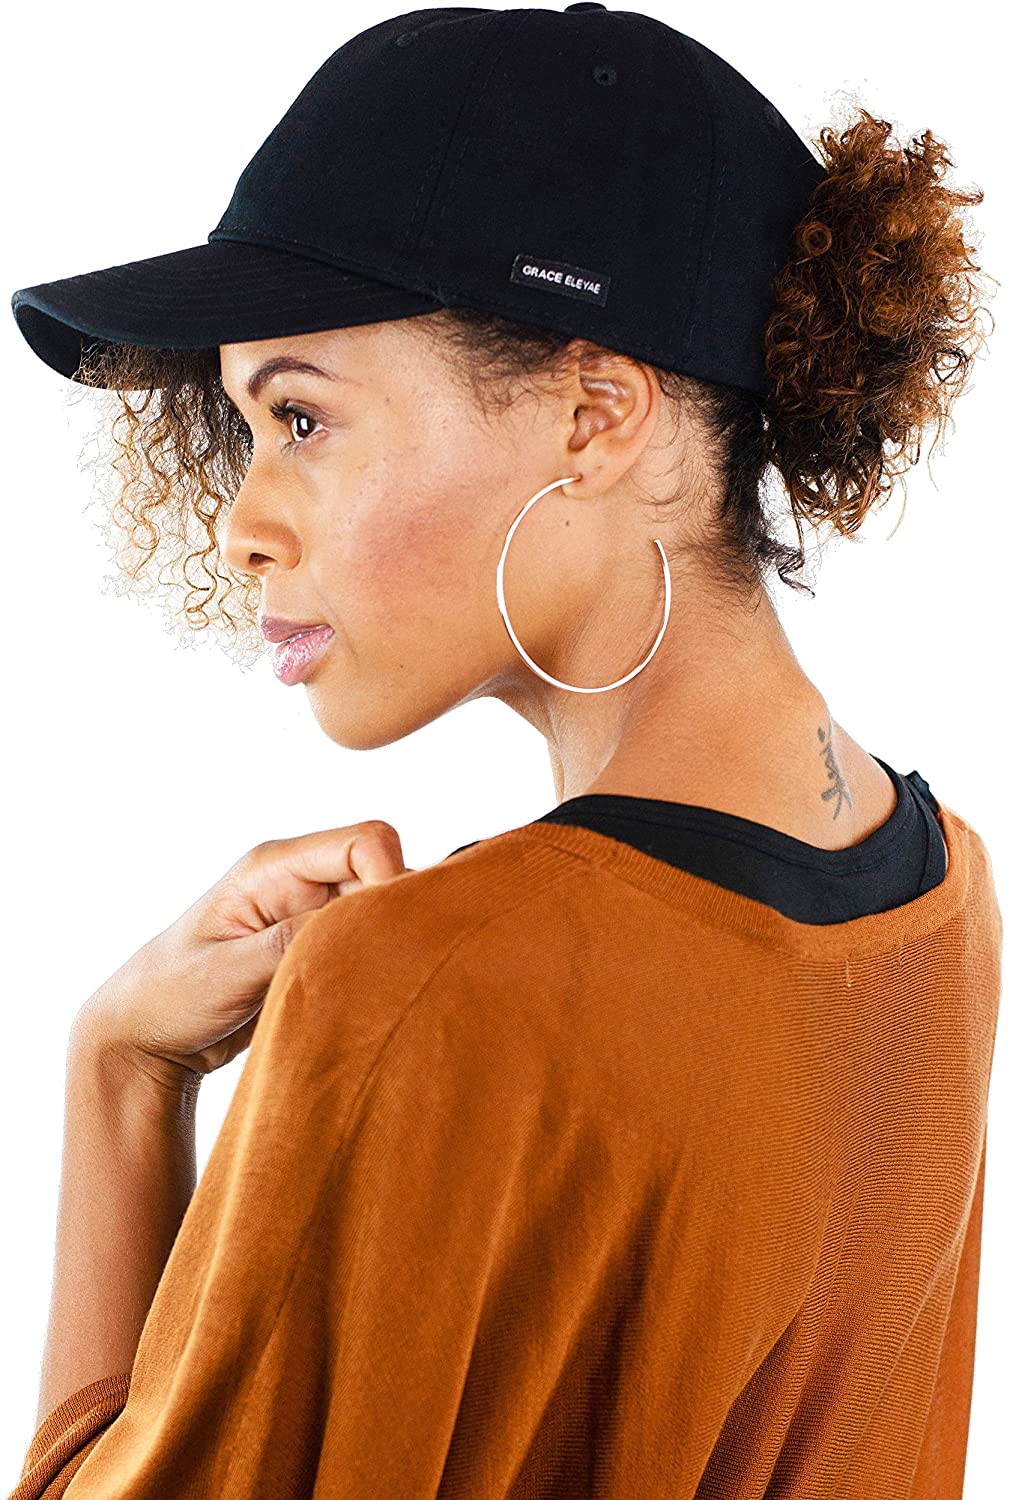 Women's Adjustable Satin-Lined Baseball Hat